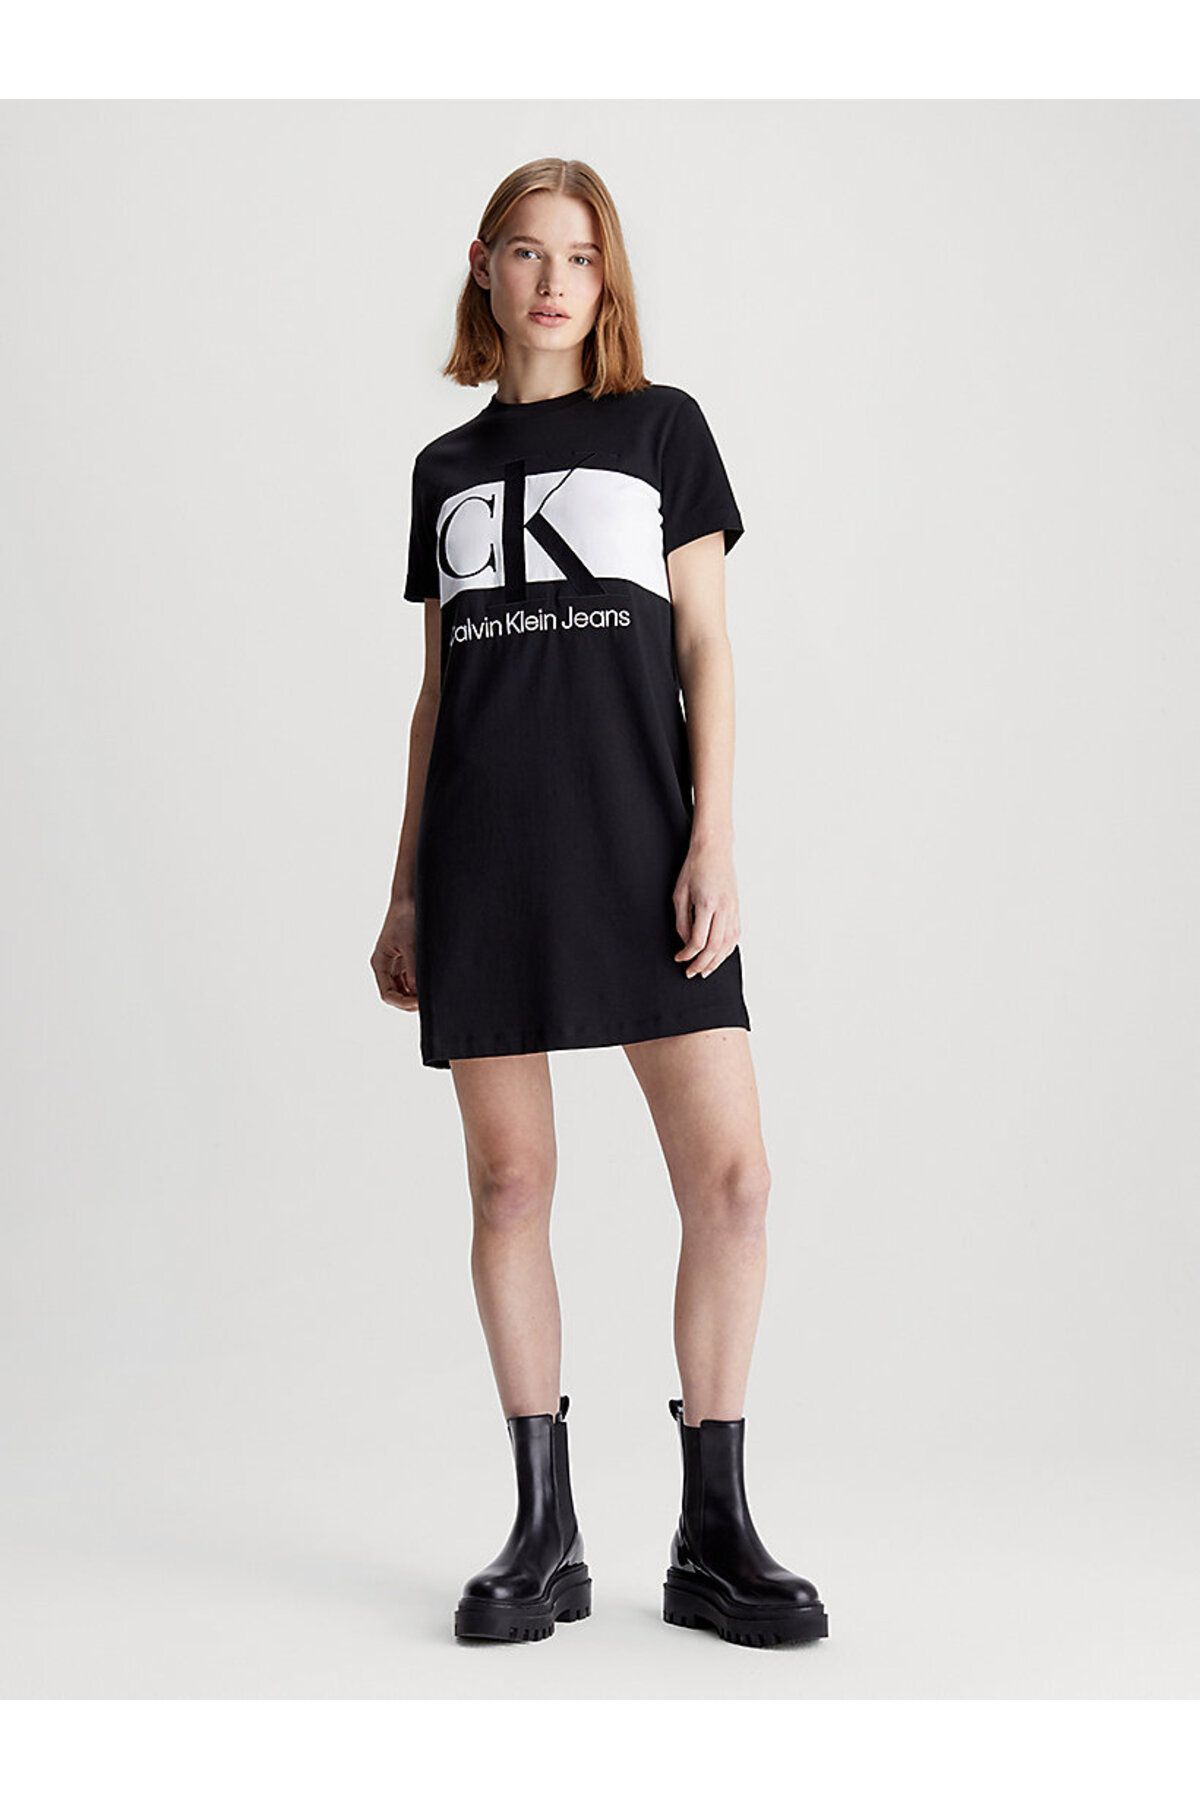 Calvin Klein BLOCKING T-SHIRT DRESS